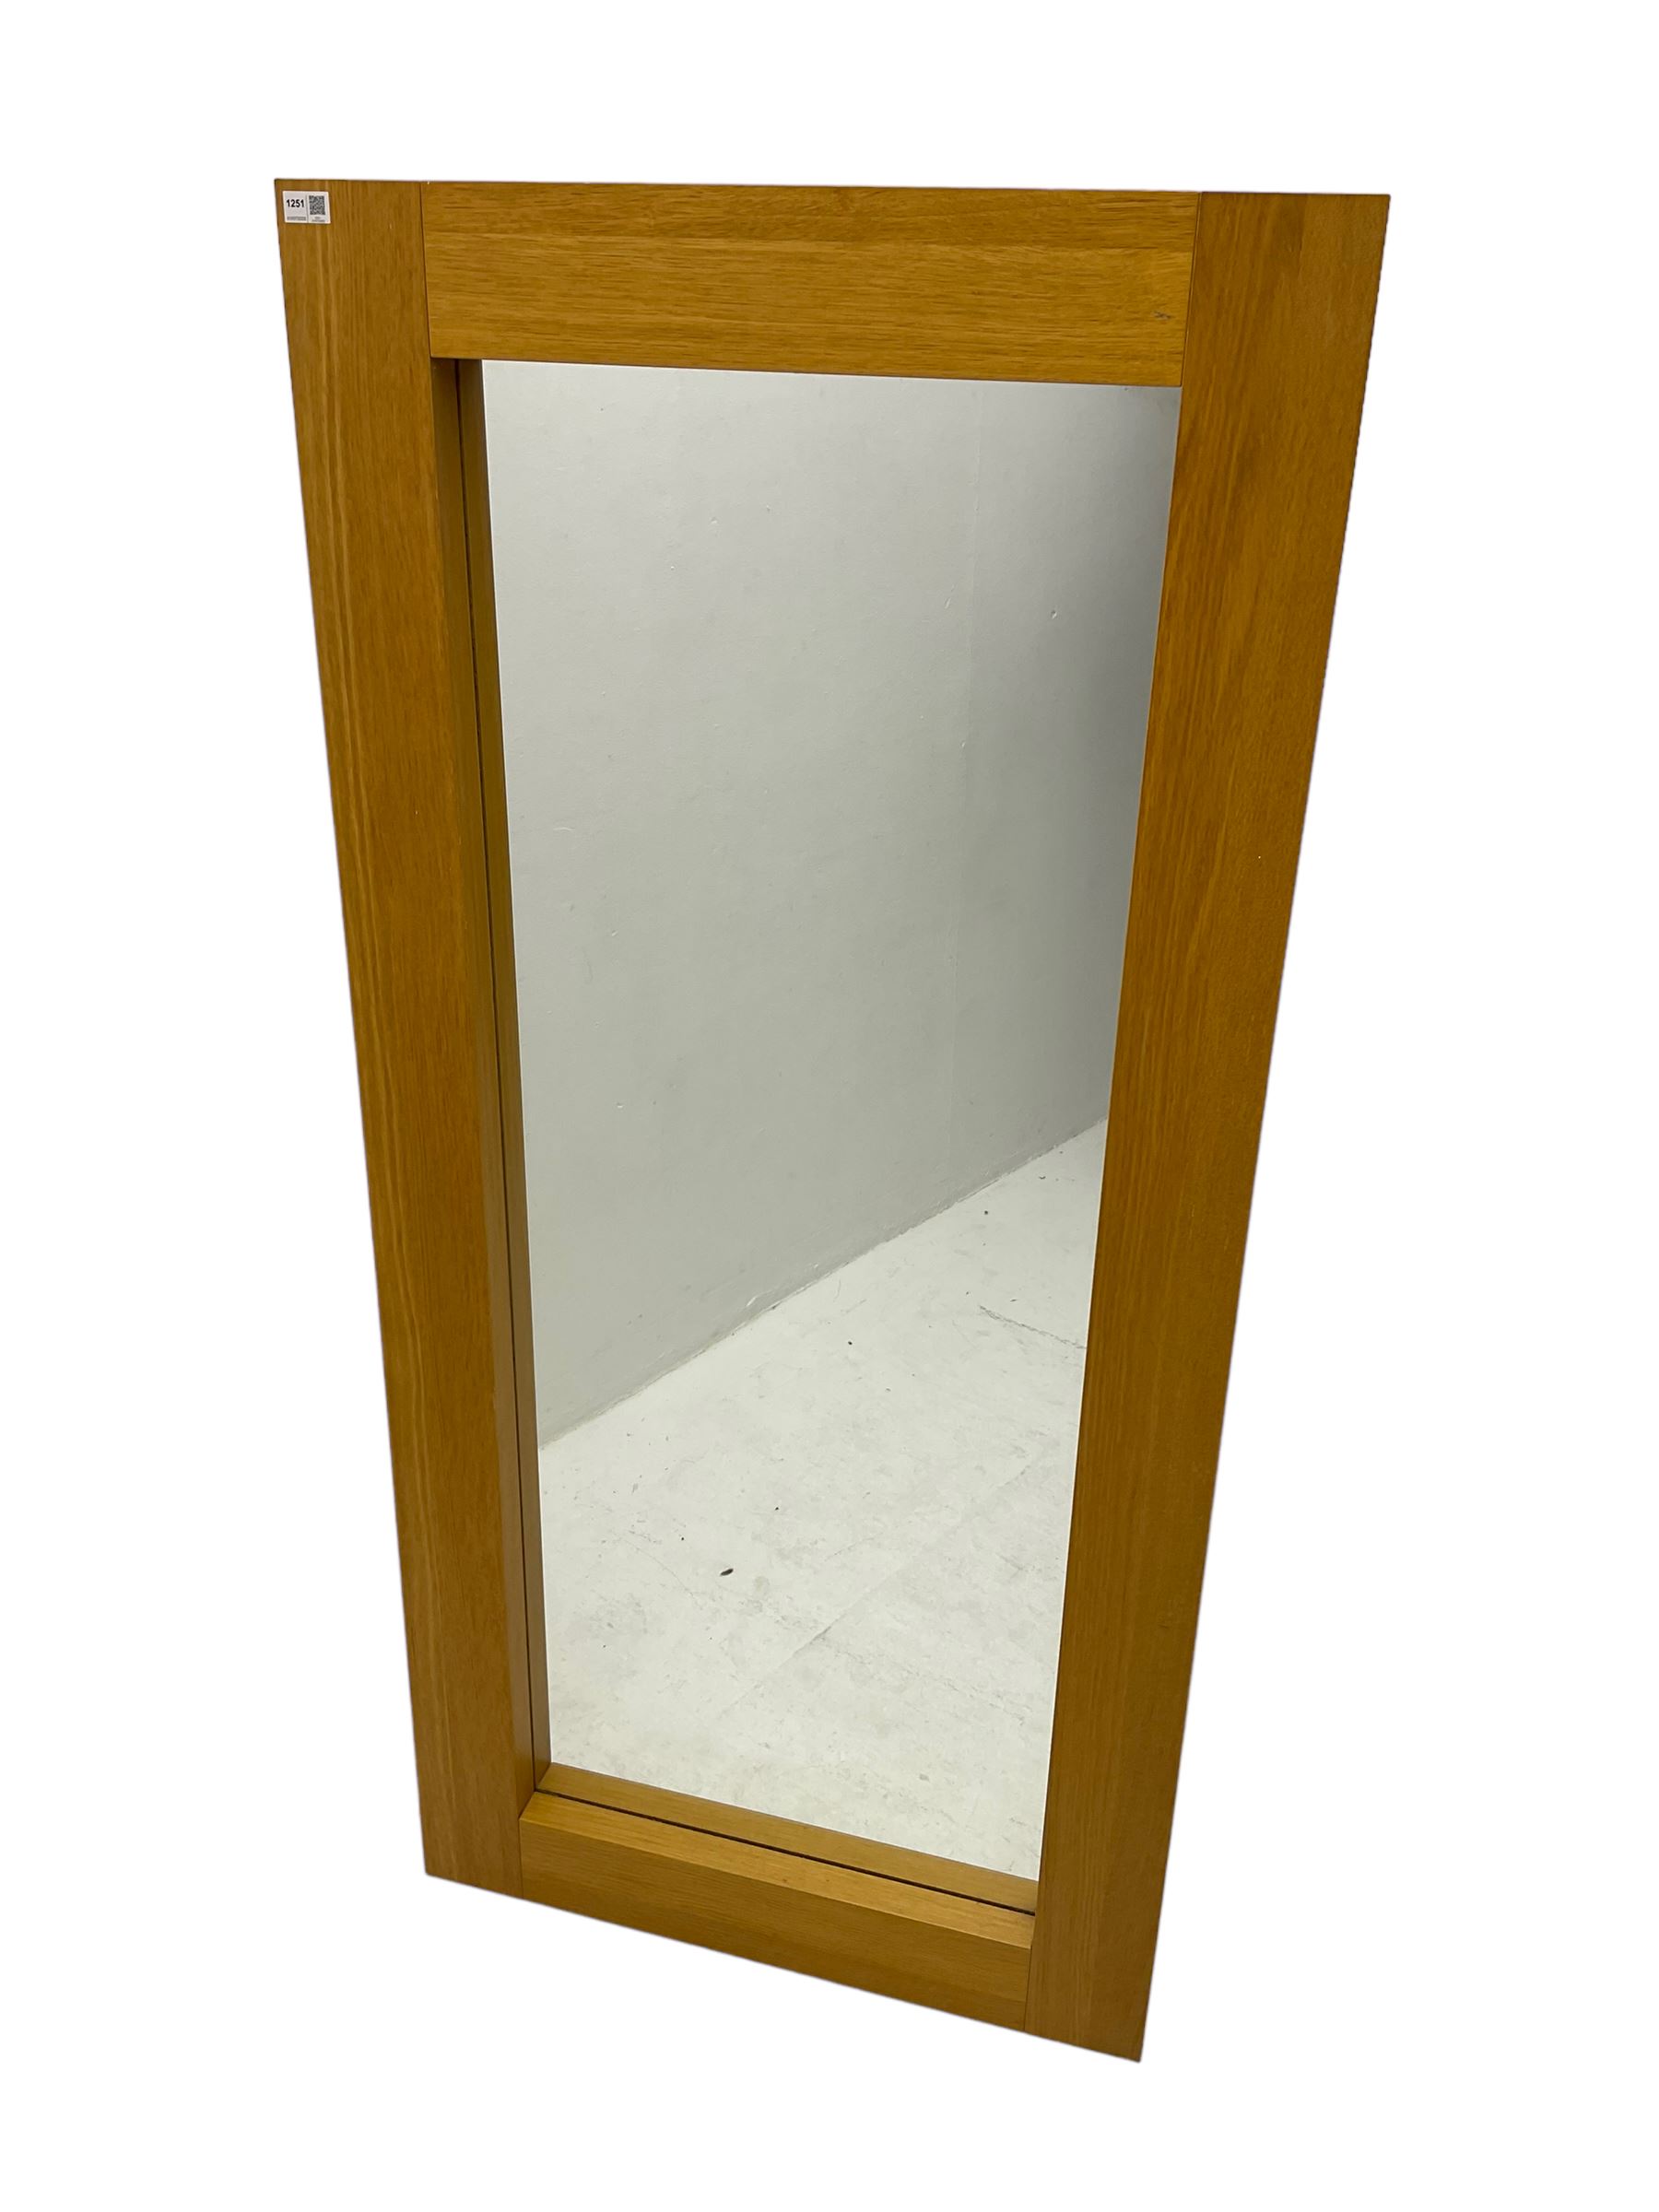 Contemporary oak framed mirror - Image 4 of 10